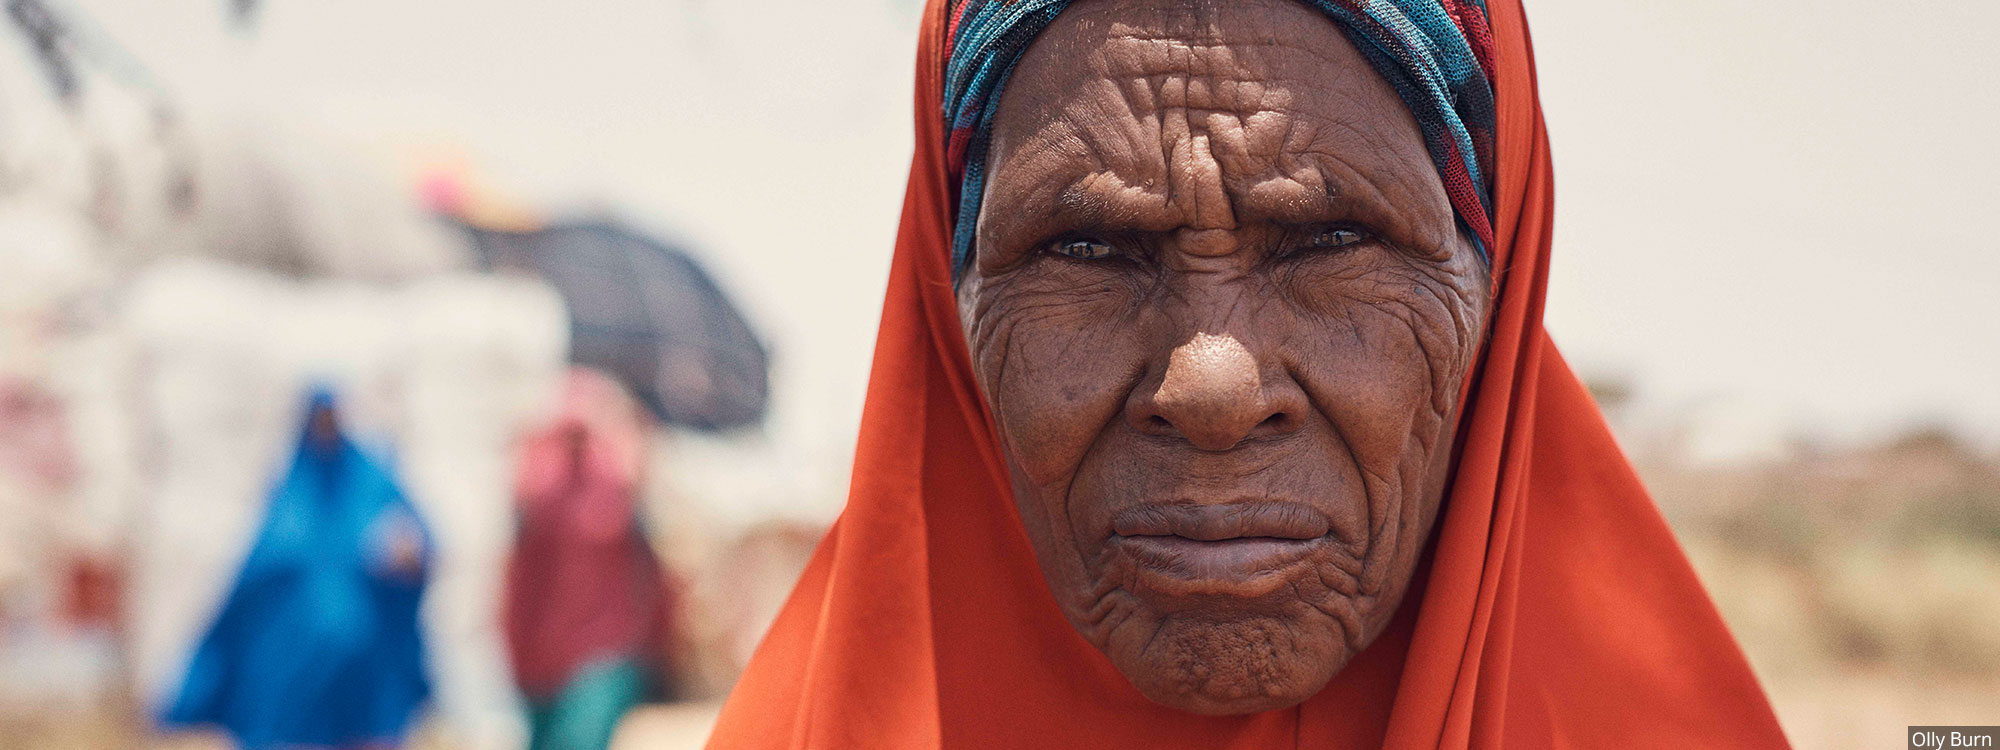 portrait of somali woman in headscarf by Olly Burn